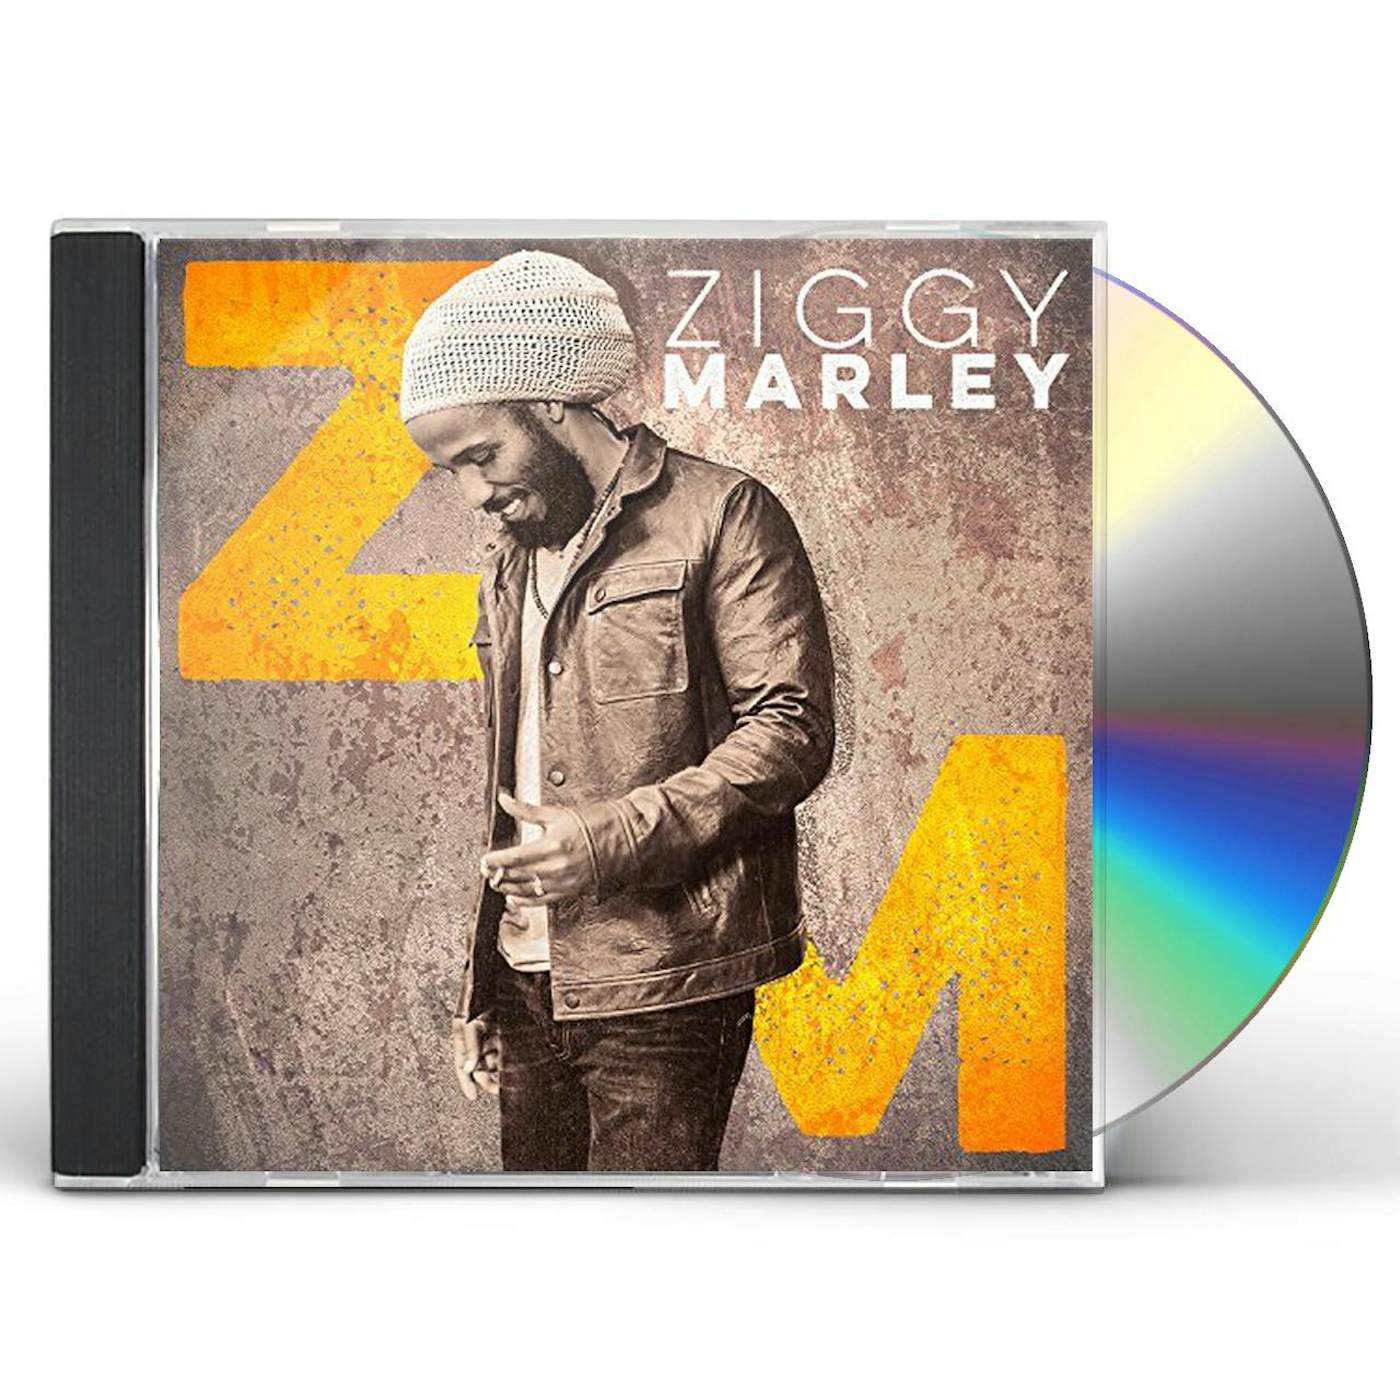 ZIGGY MARLEY CD